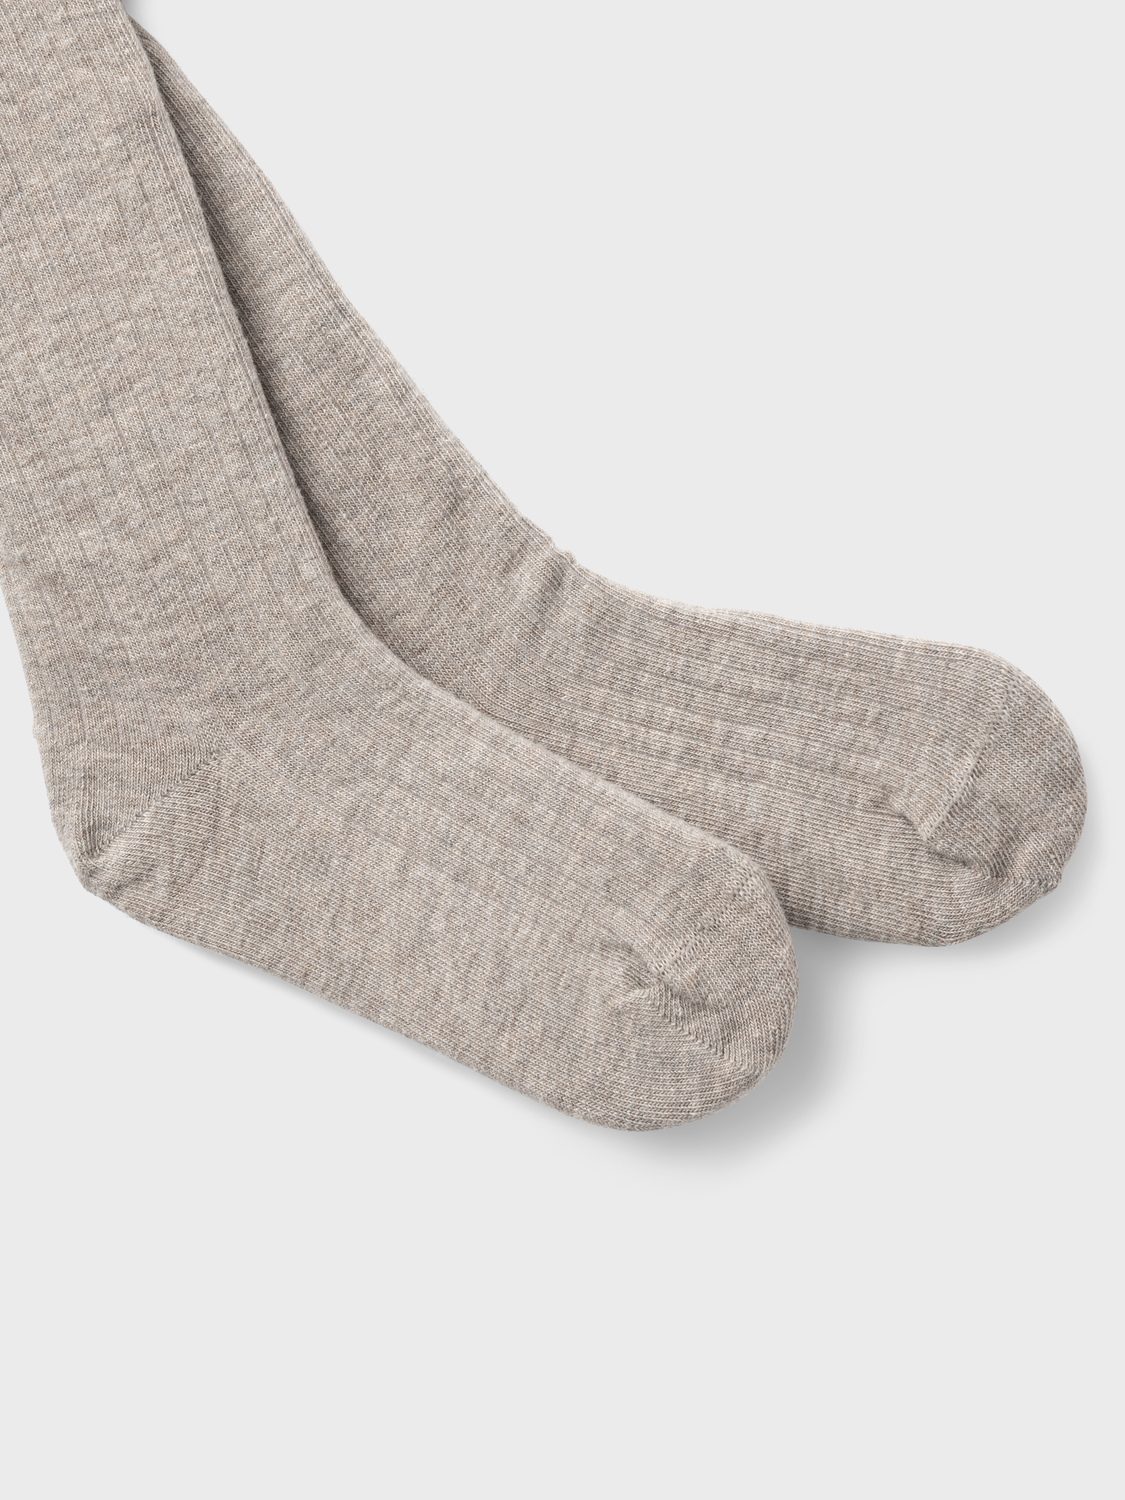 NKNPANTYHOSE Socks - Pure Cashmere